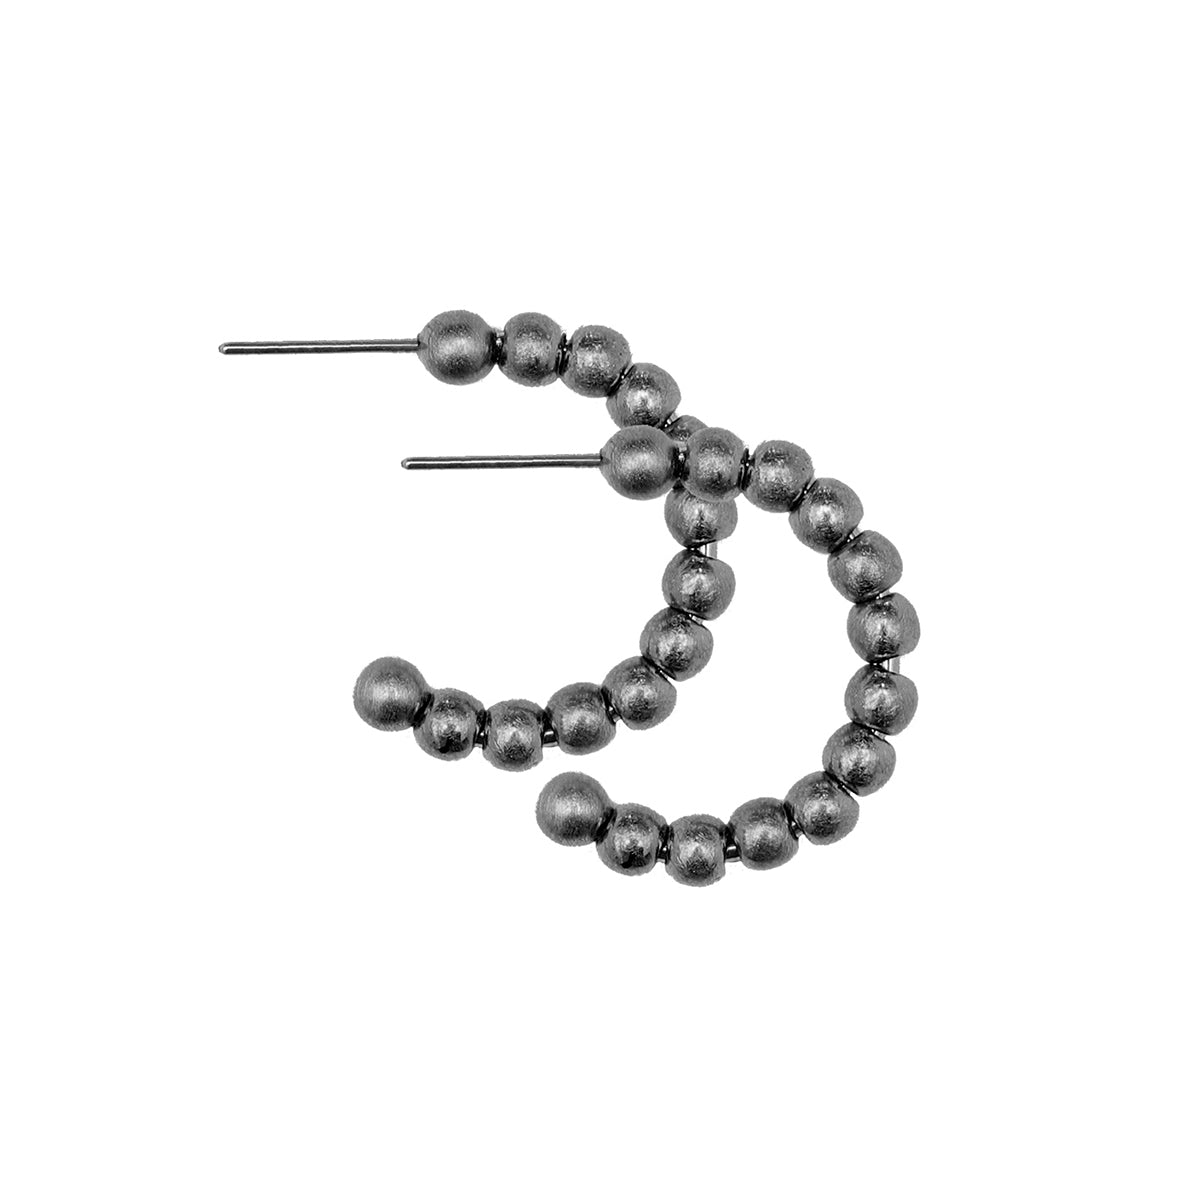 Dansk - Tabitha small hoop earrings, Hemitite colour ion platinum with surgical steel 2.5 cm